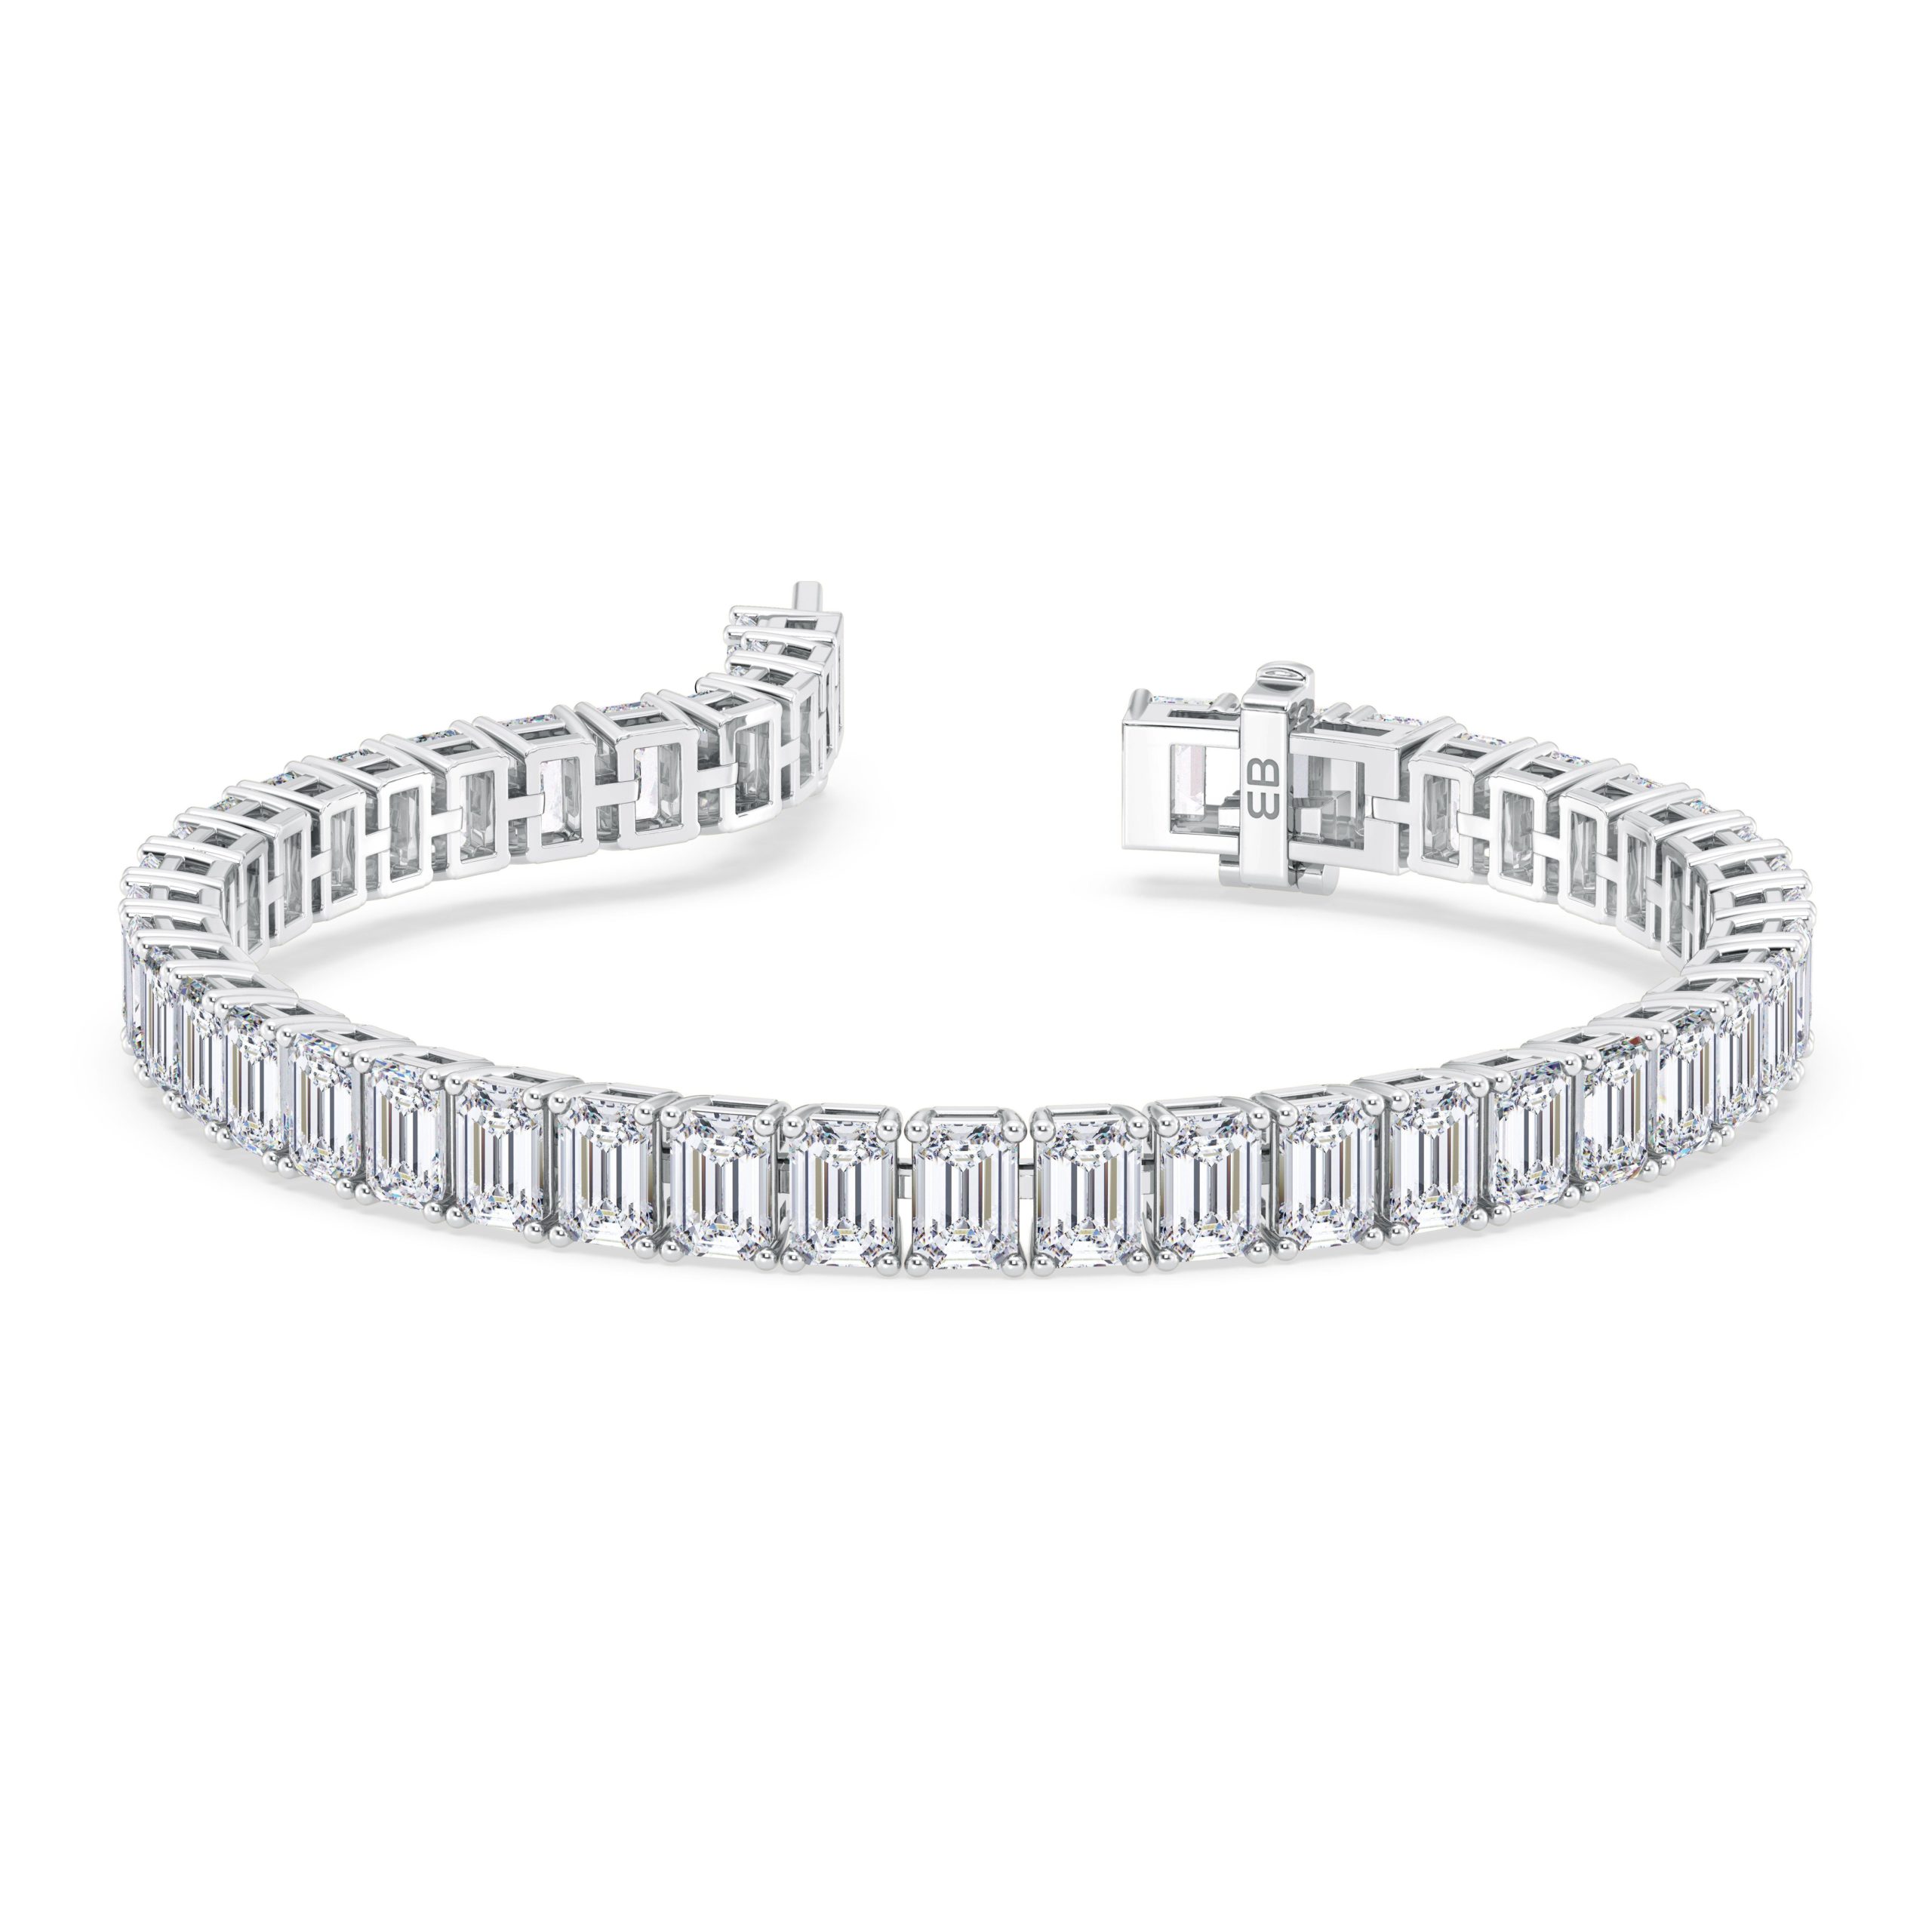 Buy Shining Diva Fashion Platinum Plated Stylish Austrian Crystal Bracelet  for Women and Girls 11955bGreen at Amazonin